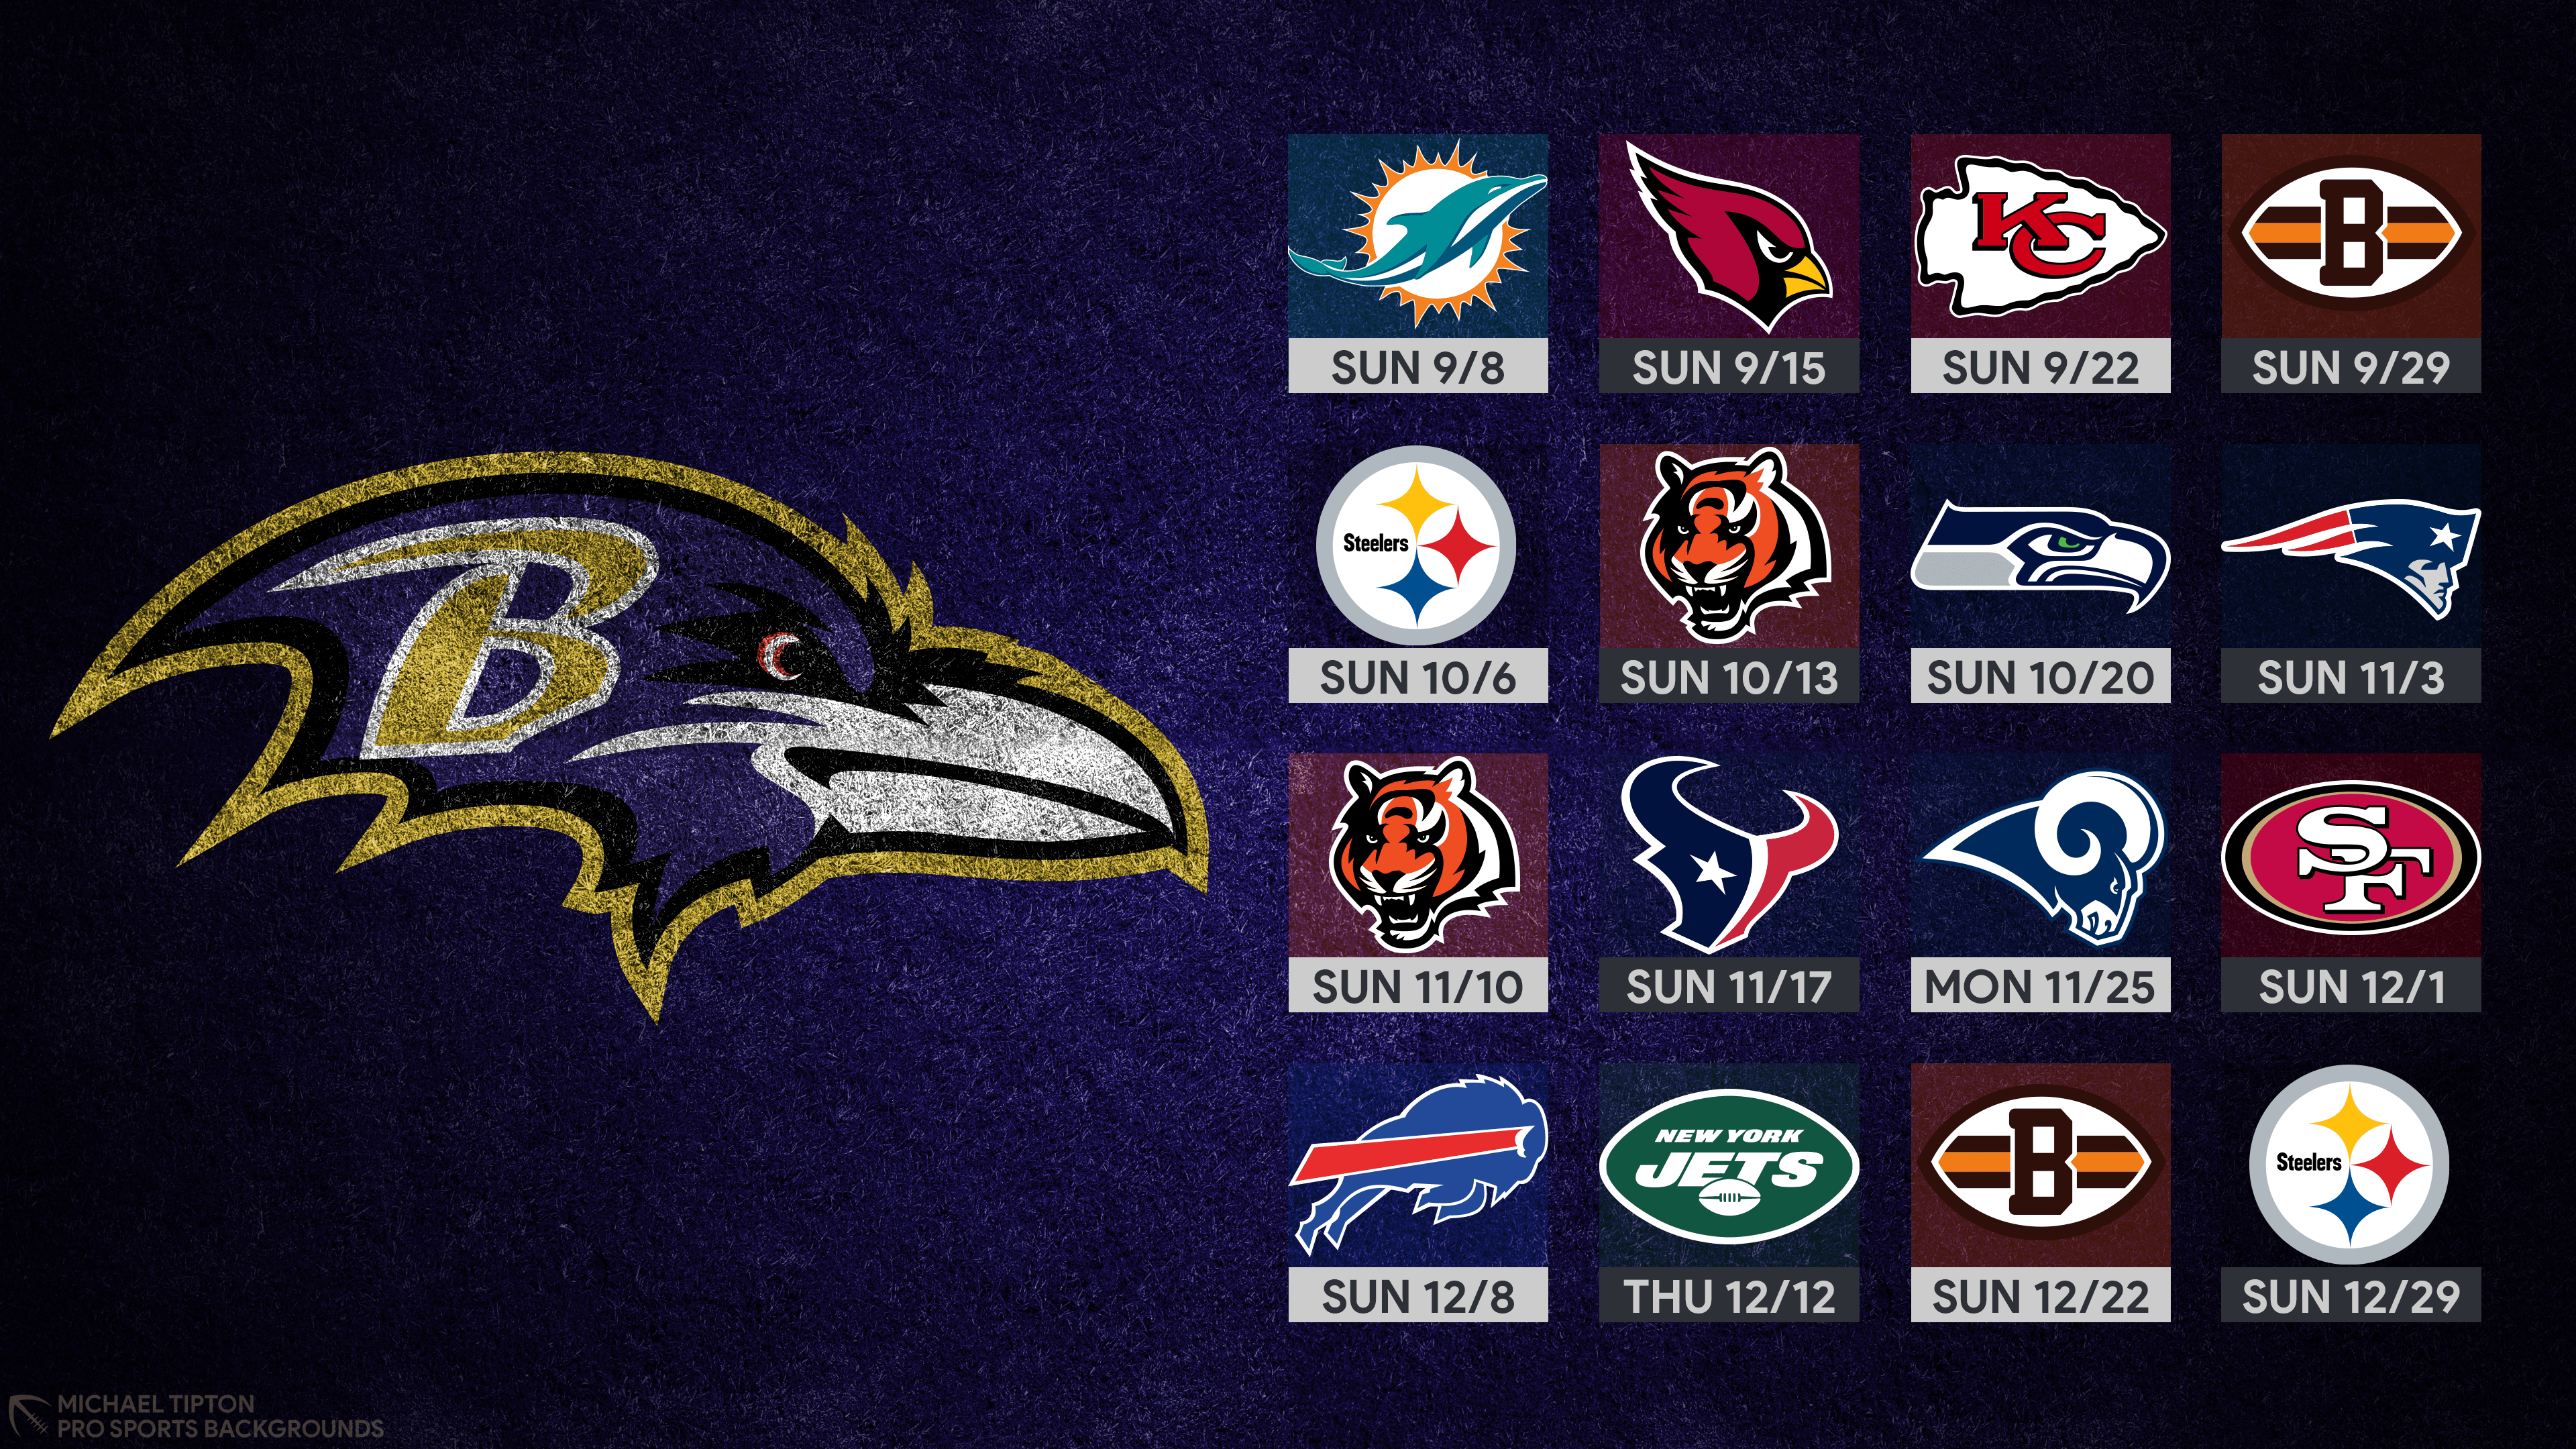 Baltimore Ravens Wallpaper. Pro Sports Background